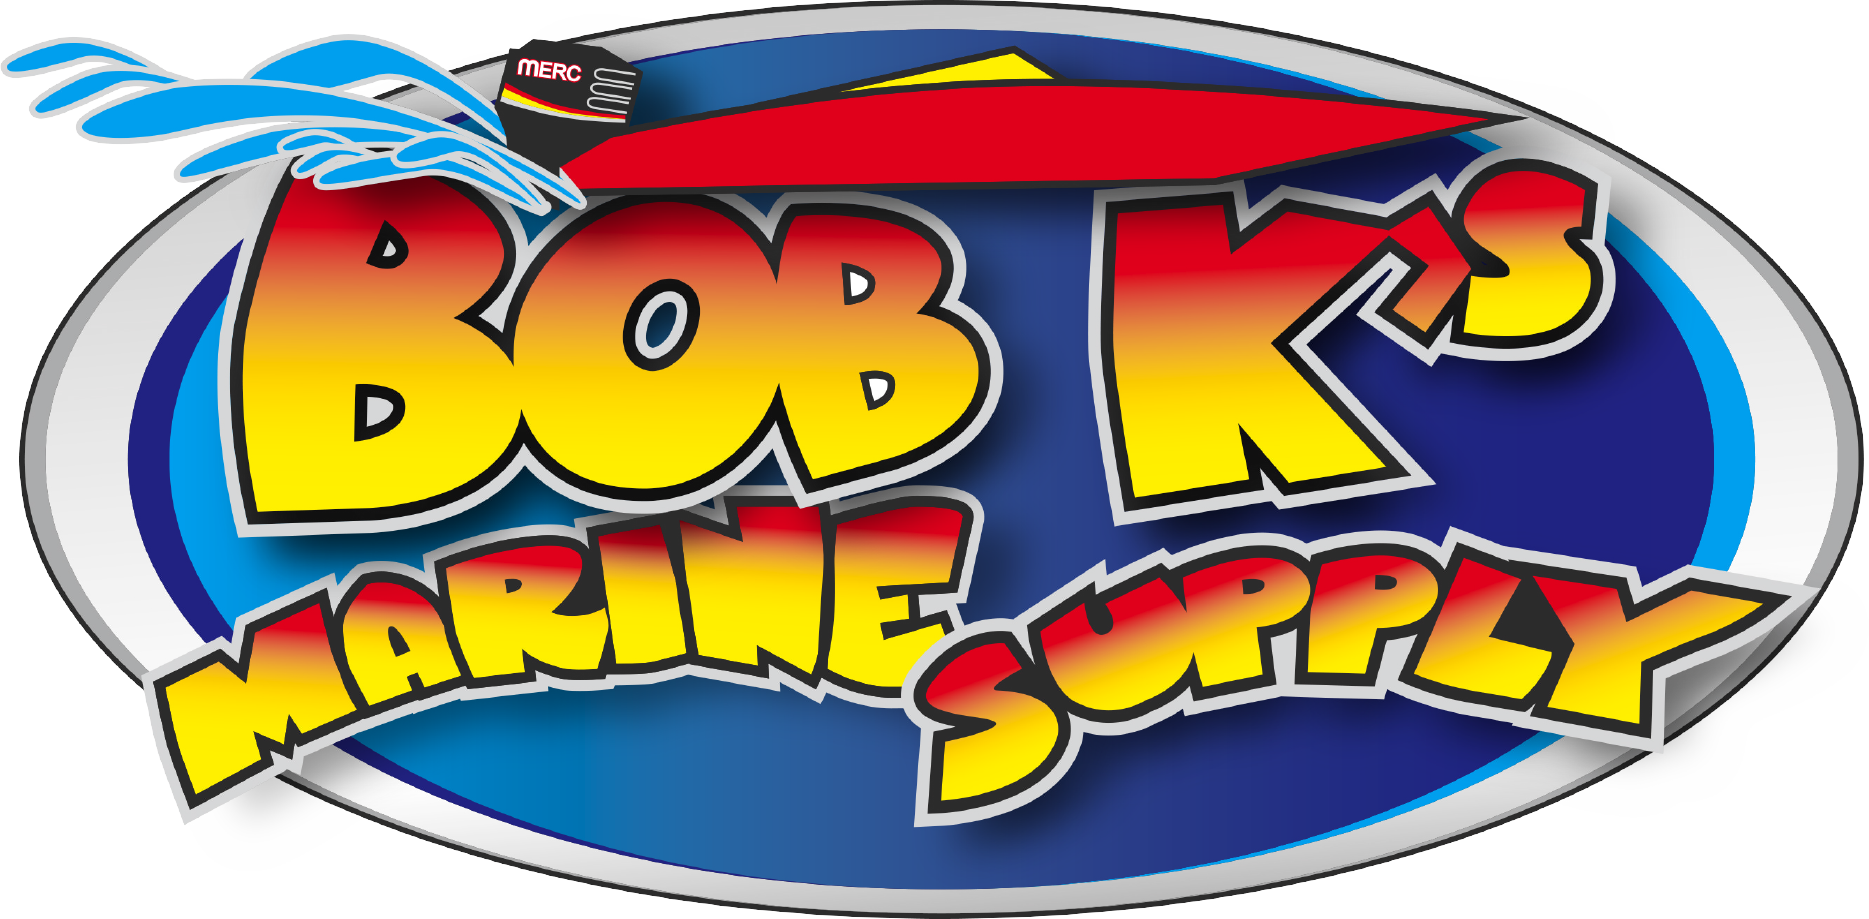 Bob K’s Marine Supply